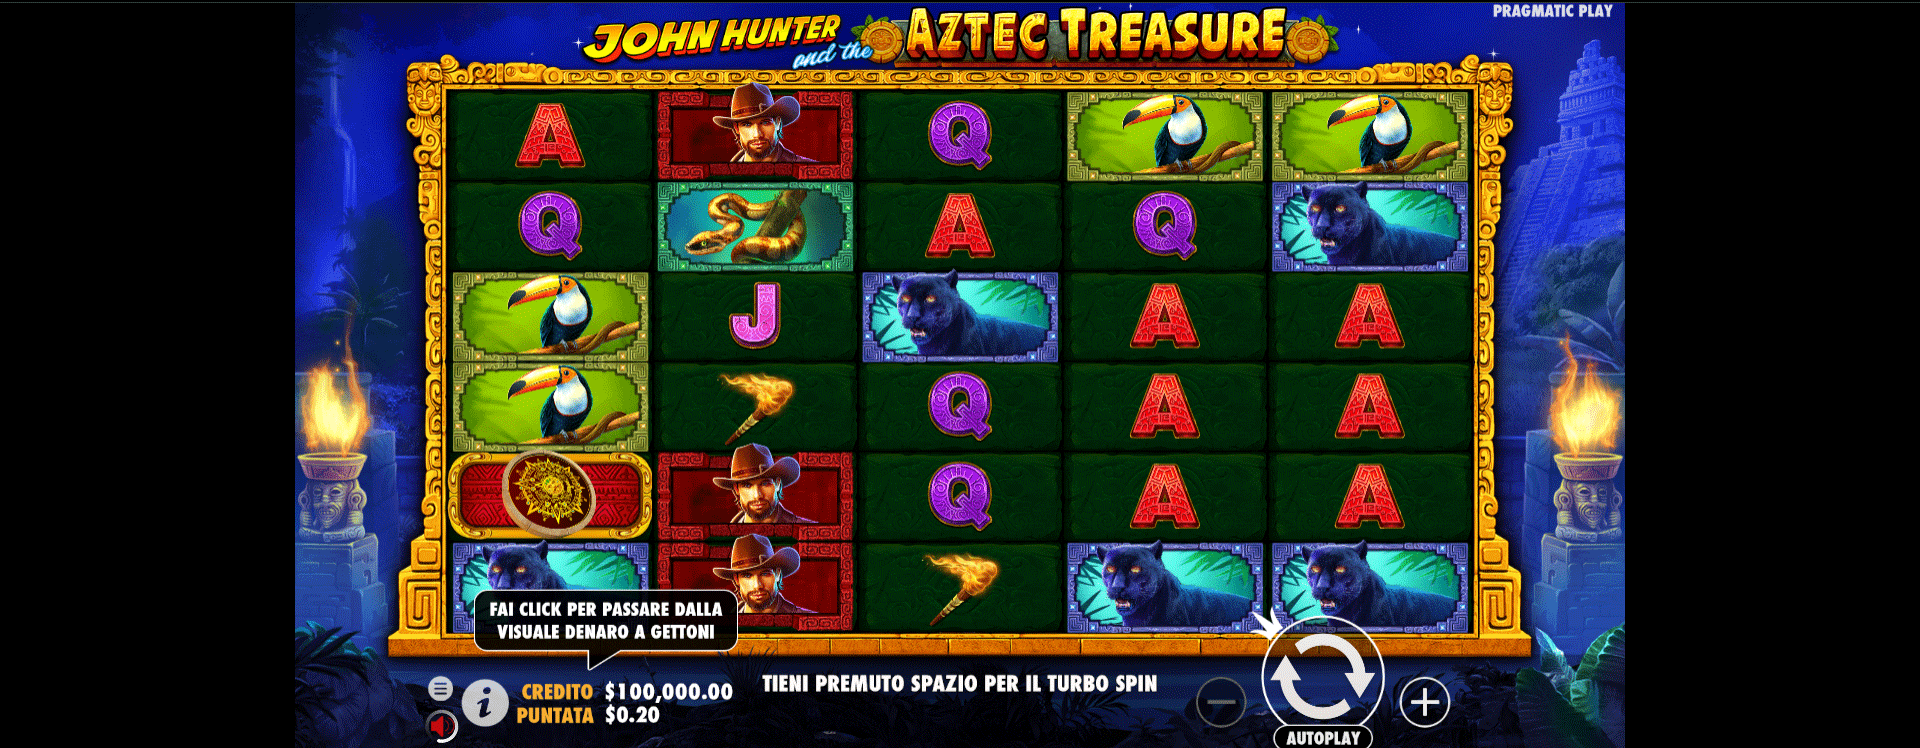 Slot John Hunter and the Aztec Treasure